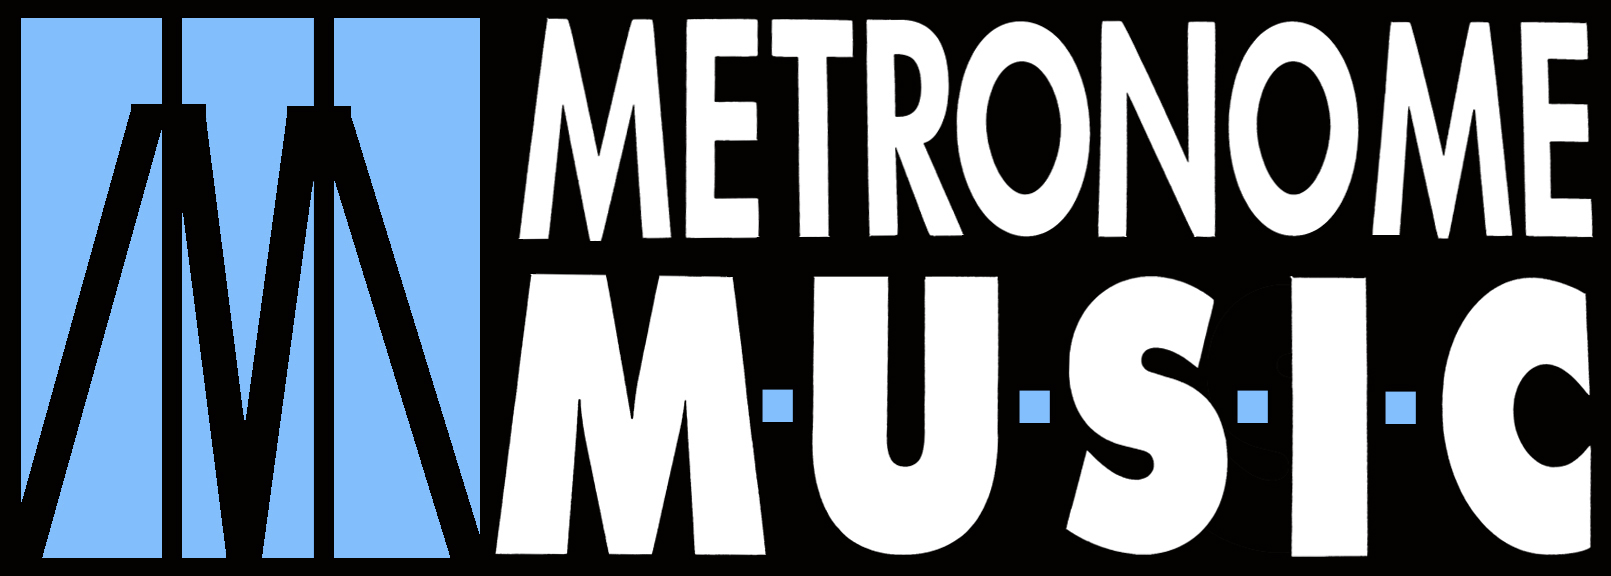 Metronome Music, Inc. - logo